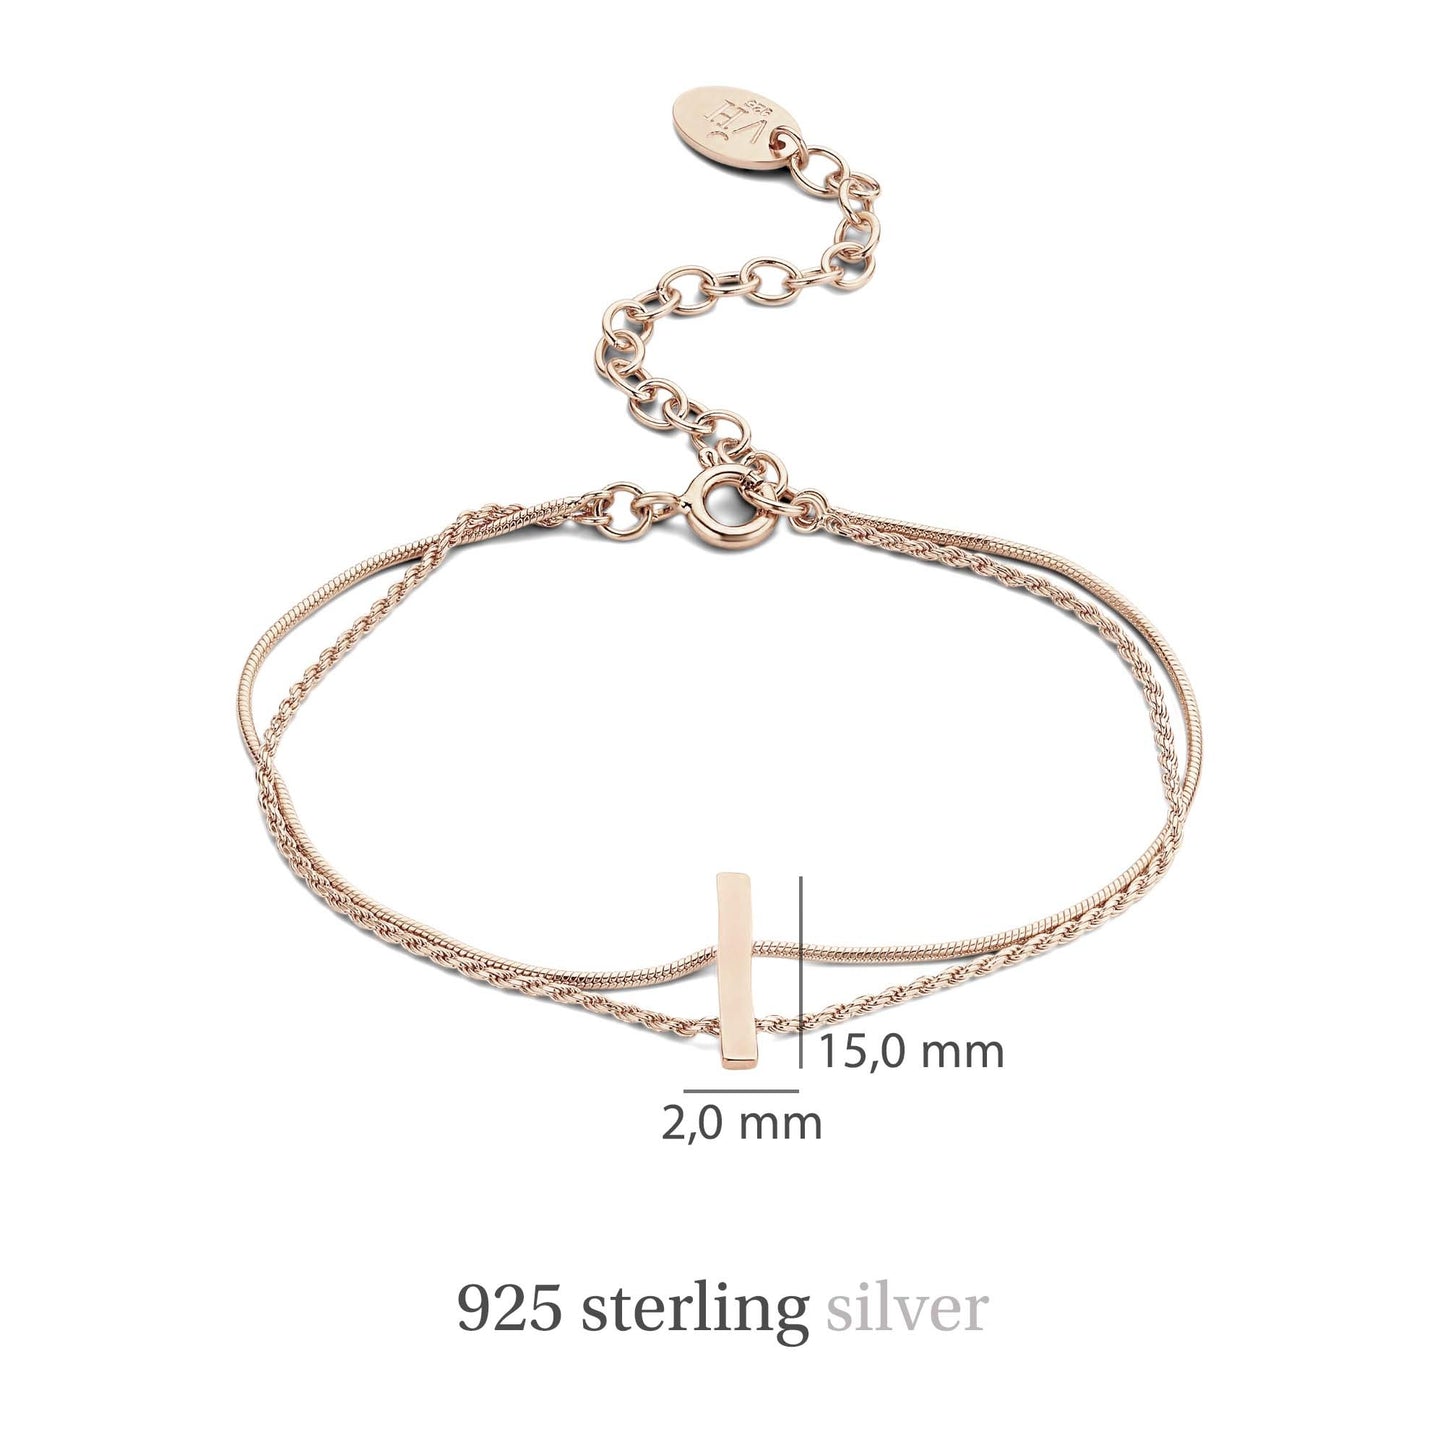 Sisterhood Moonscape bracciale in argento sterling 925 placcato oro rosa